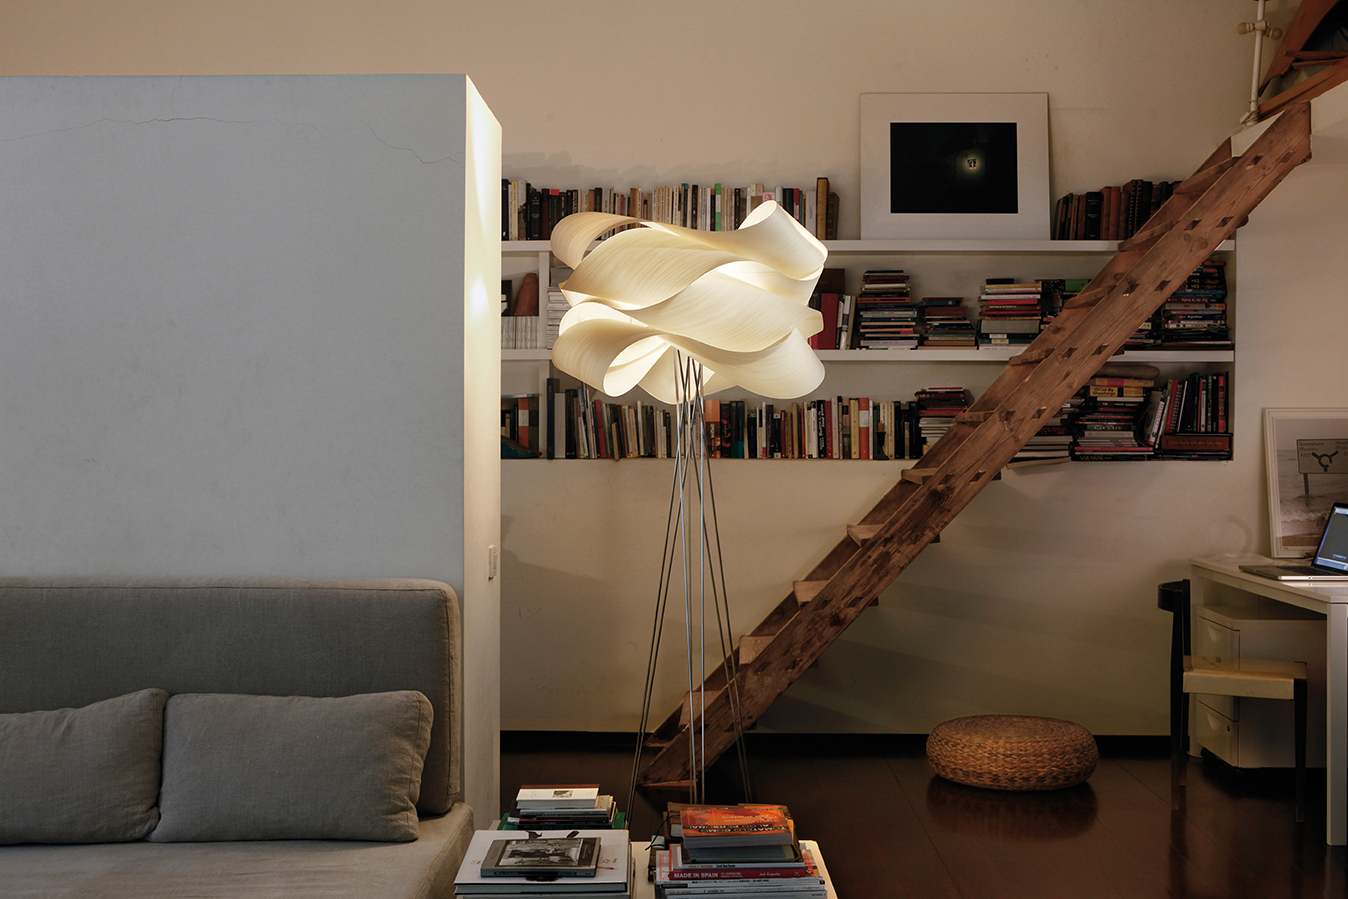 Link Floor Lamp in a modern living room.